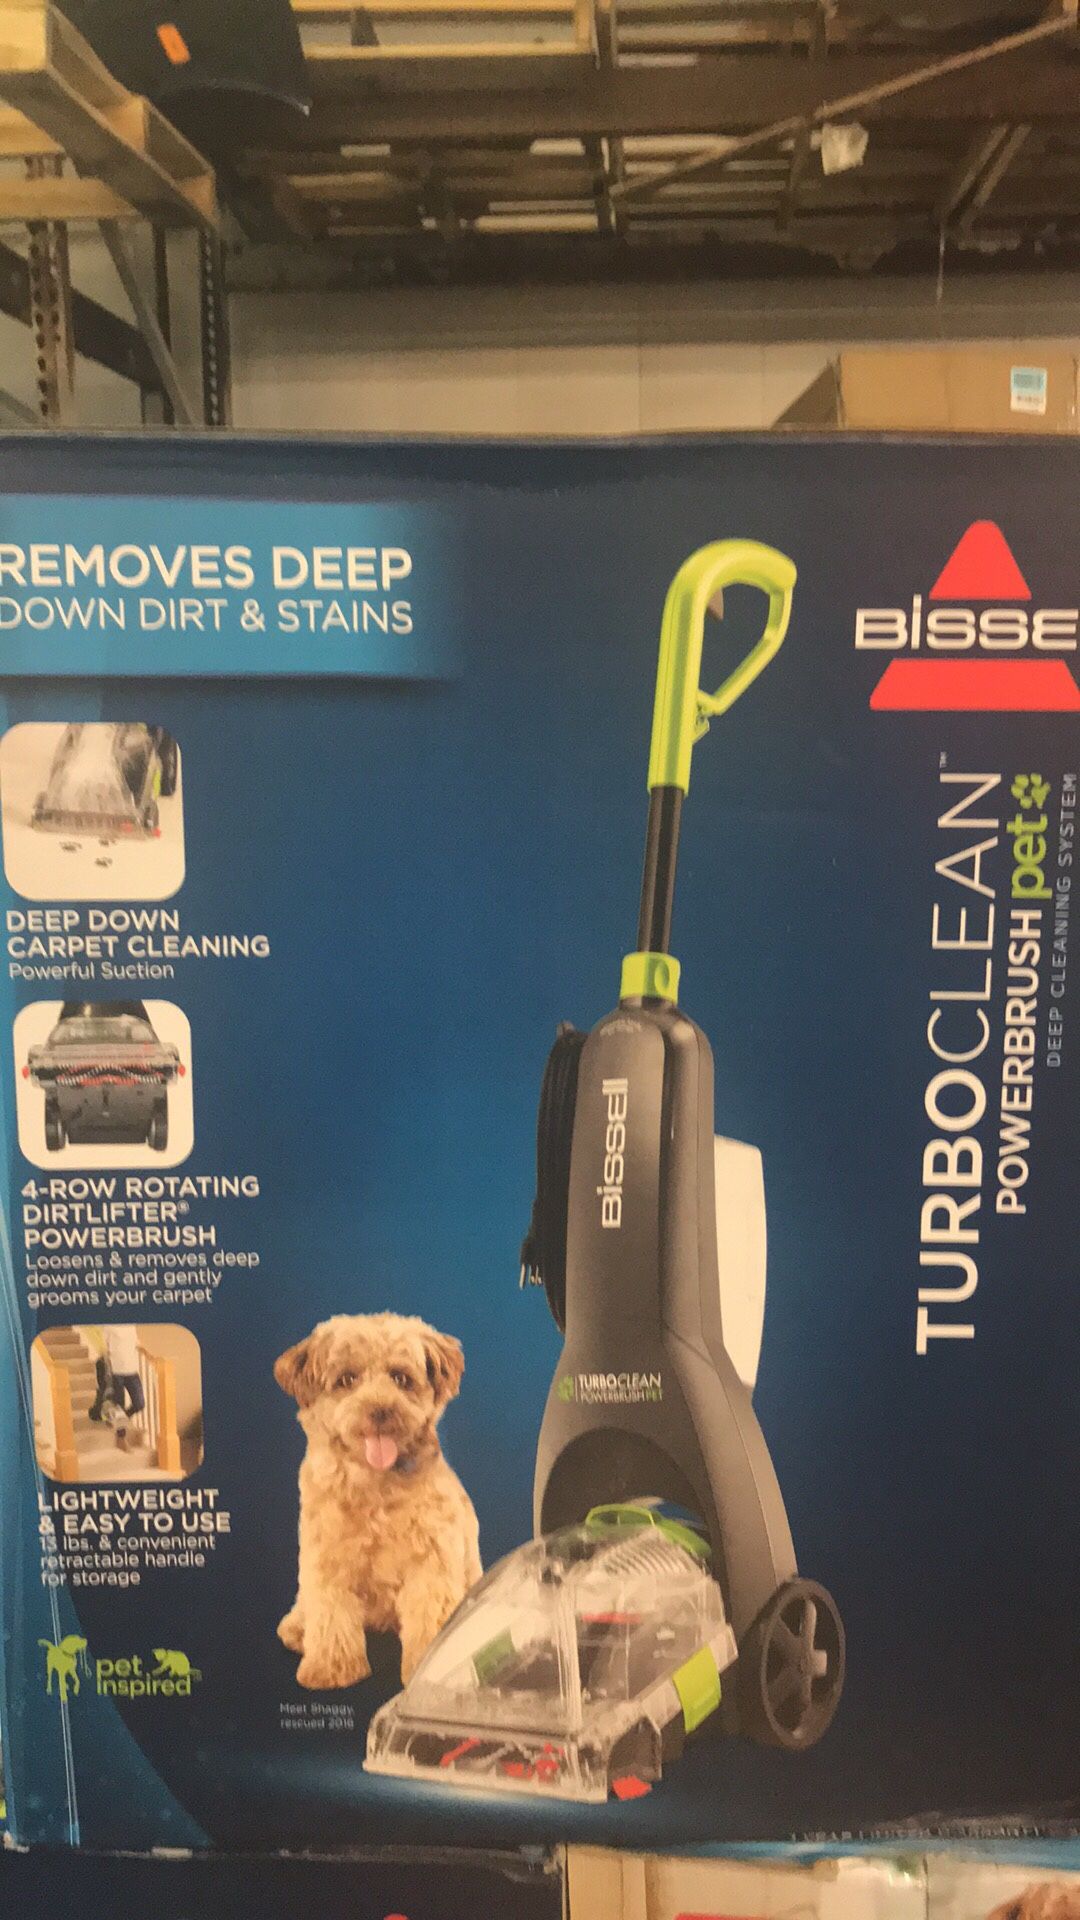 New bissell vacuum